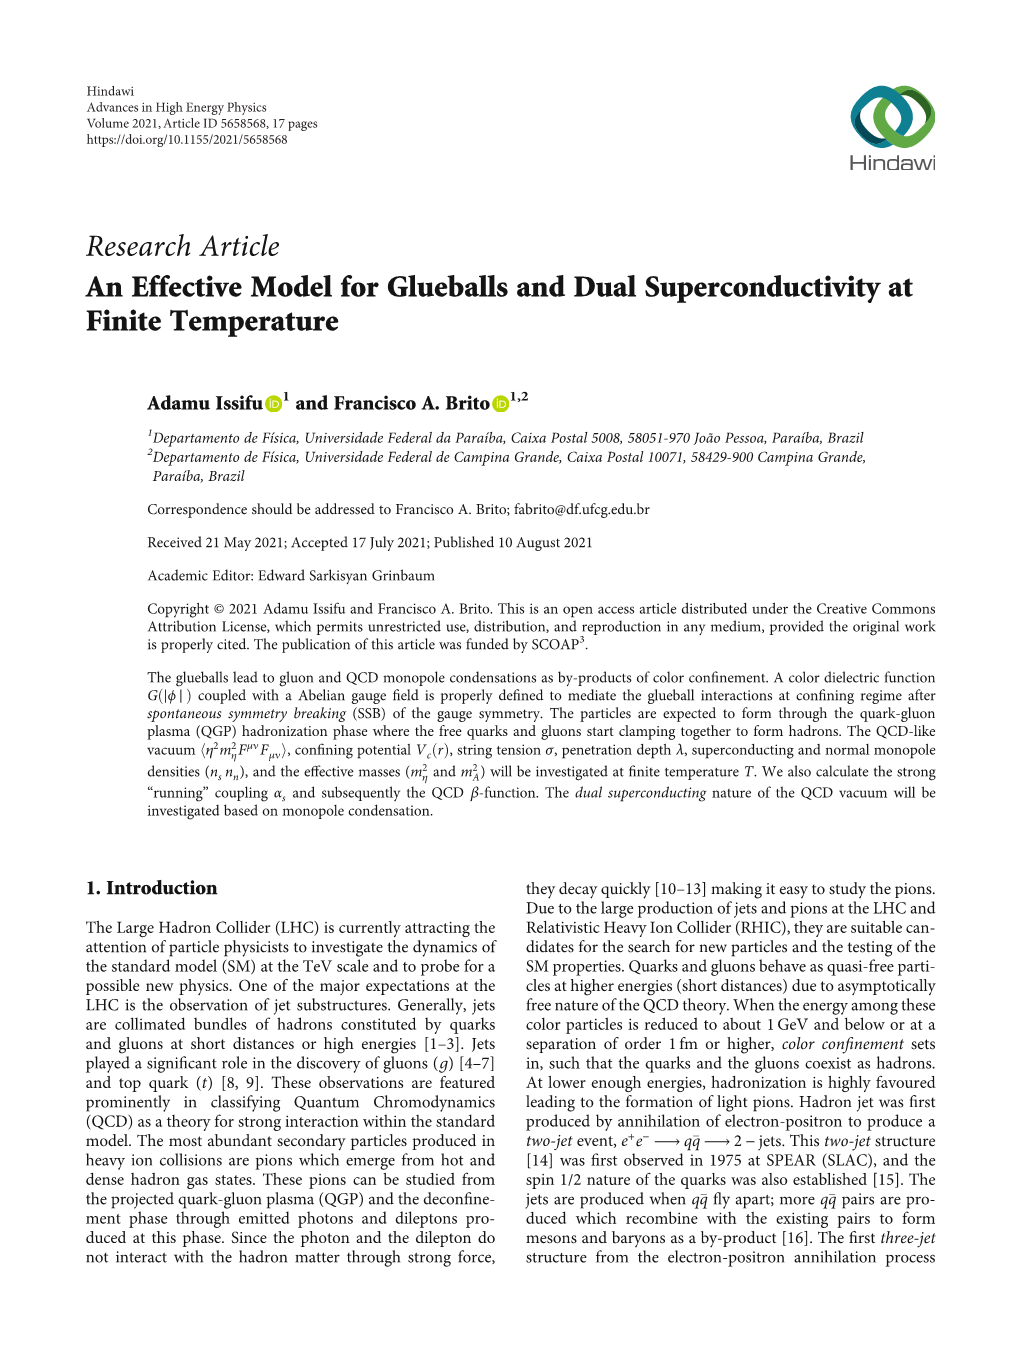 An Effective Model for Glueballs and Dual Superconductivity at Finite Temperature